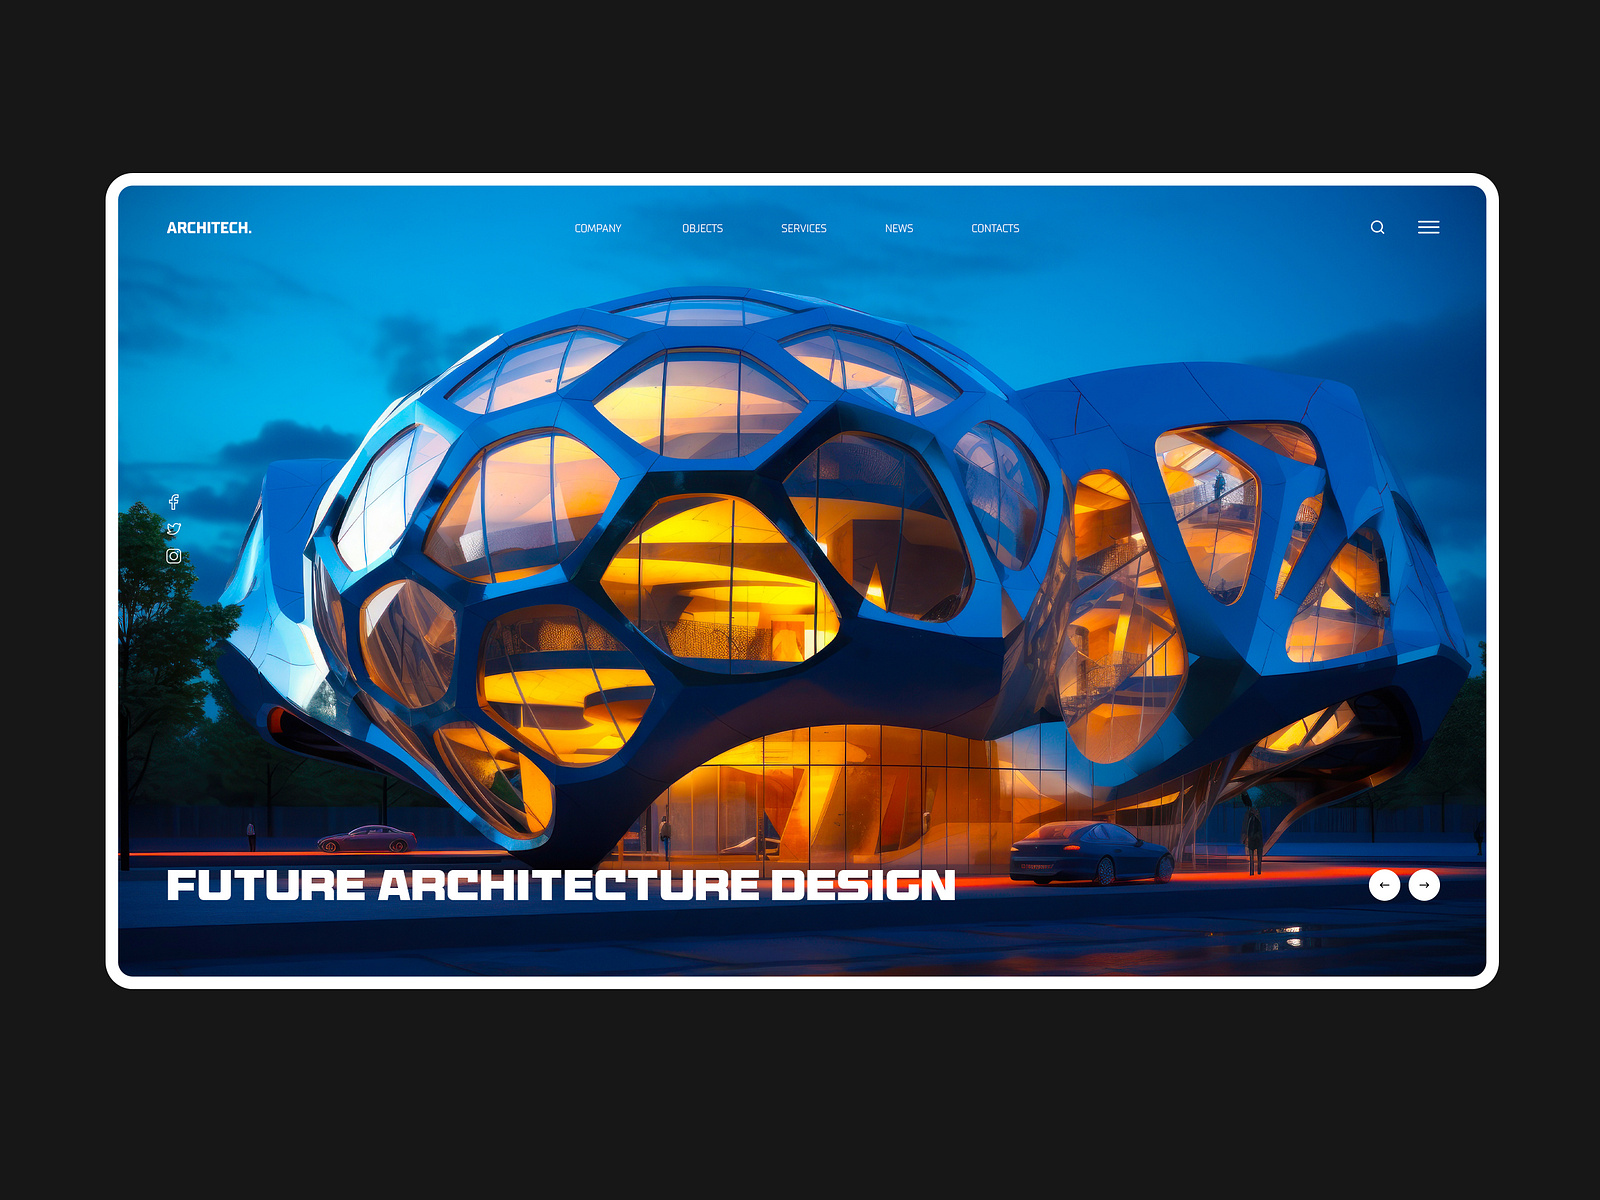 Architecture design concept by Aleksey Kostiuk on Dribbble